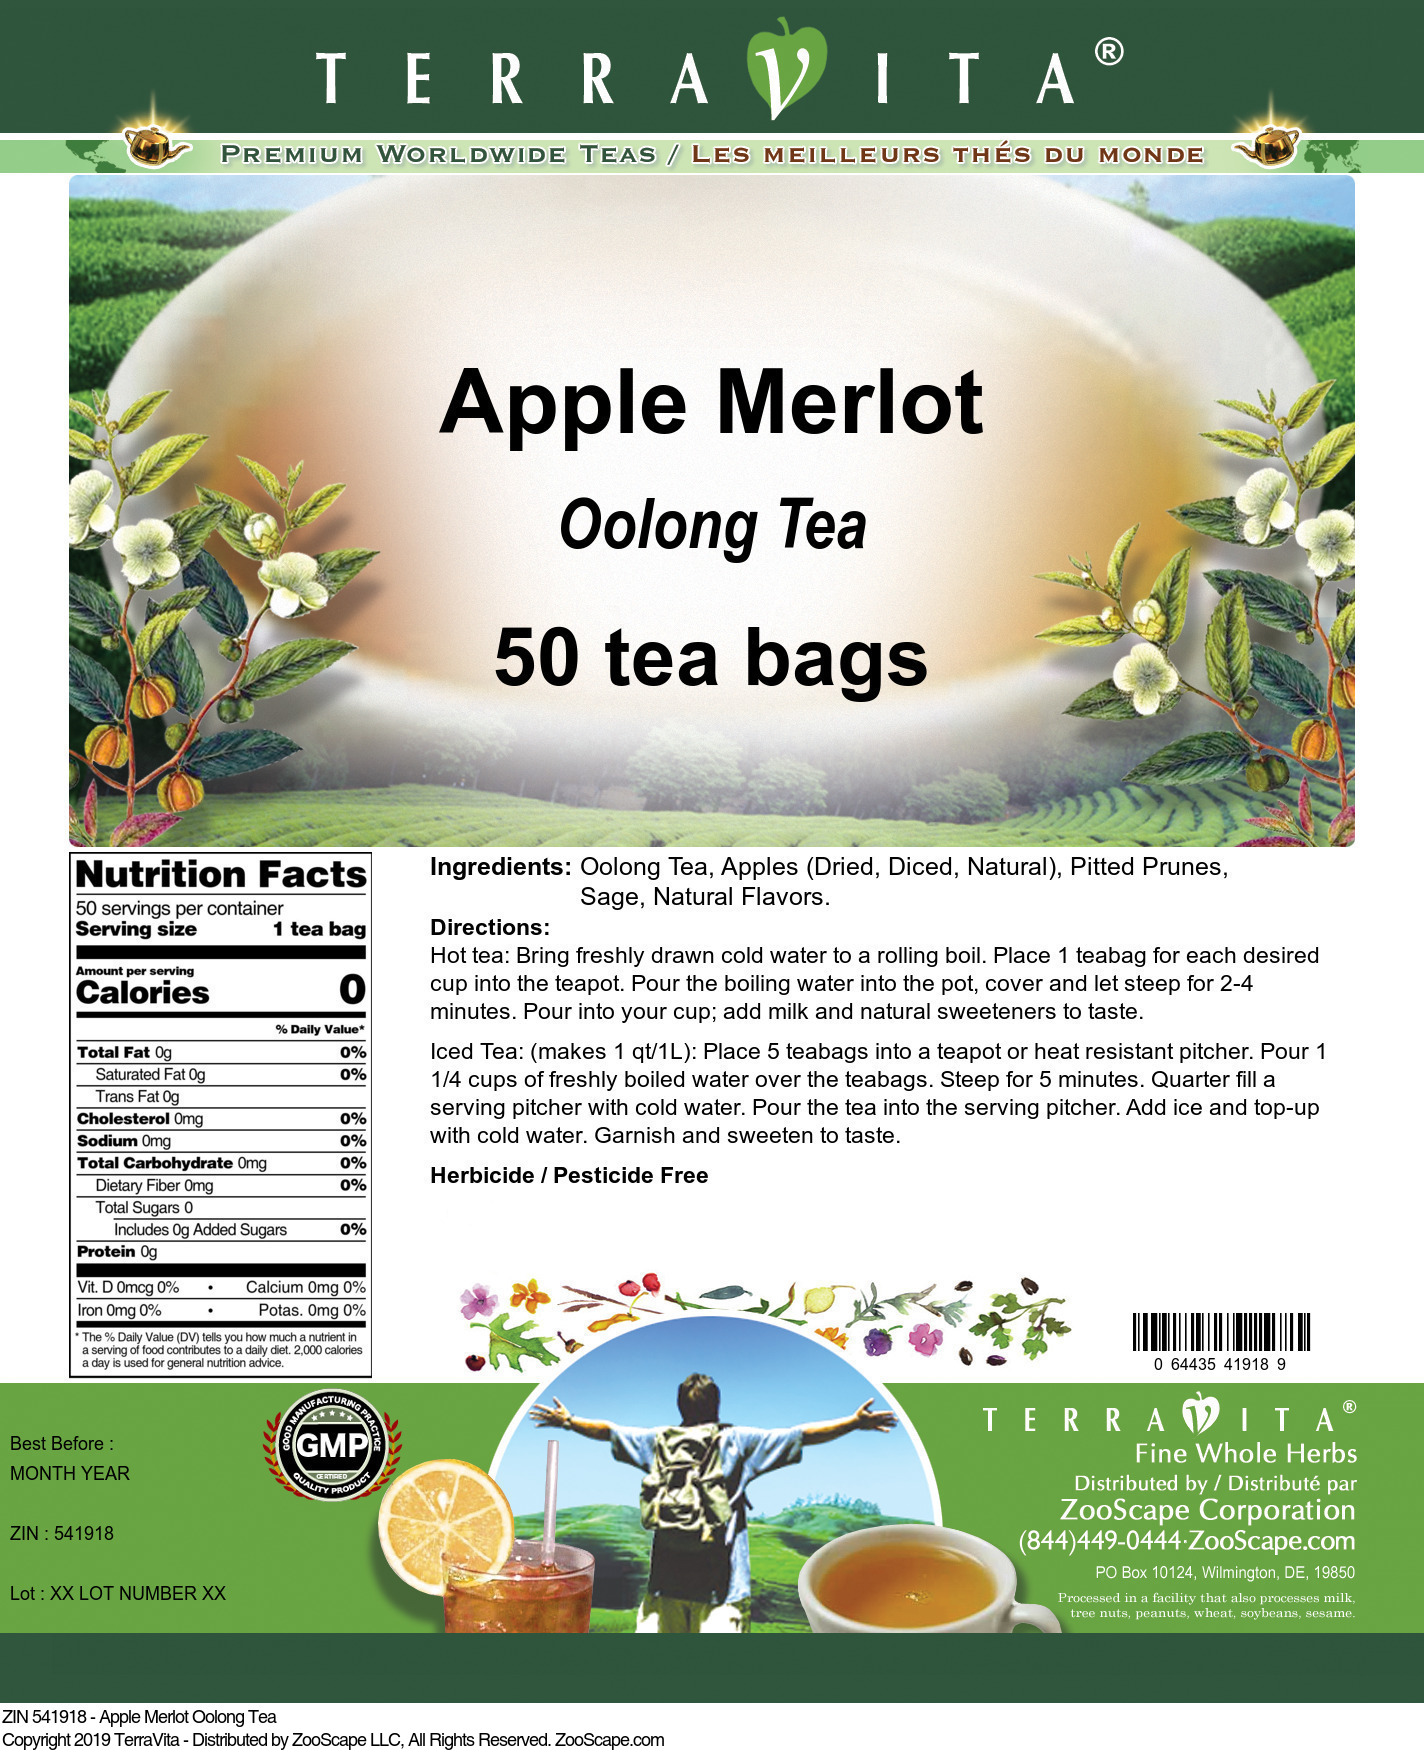 Apple Merlot Oolong Tea - Label